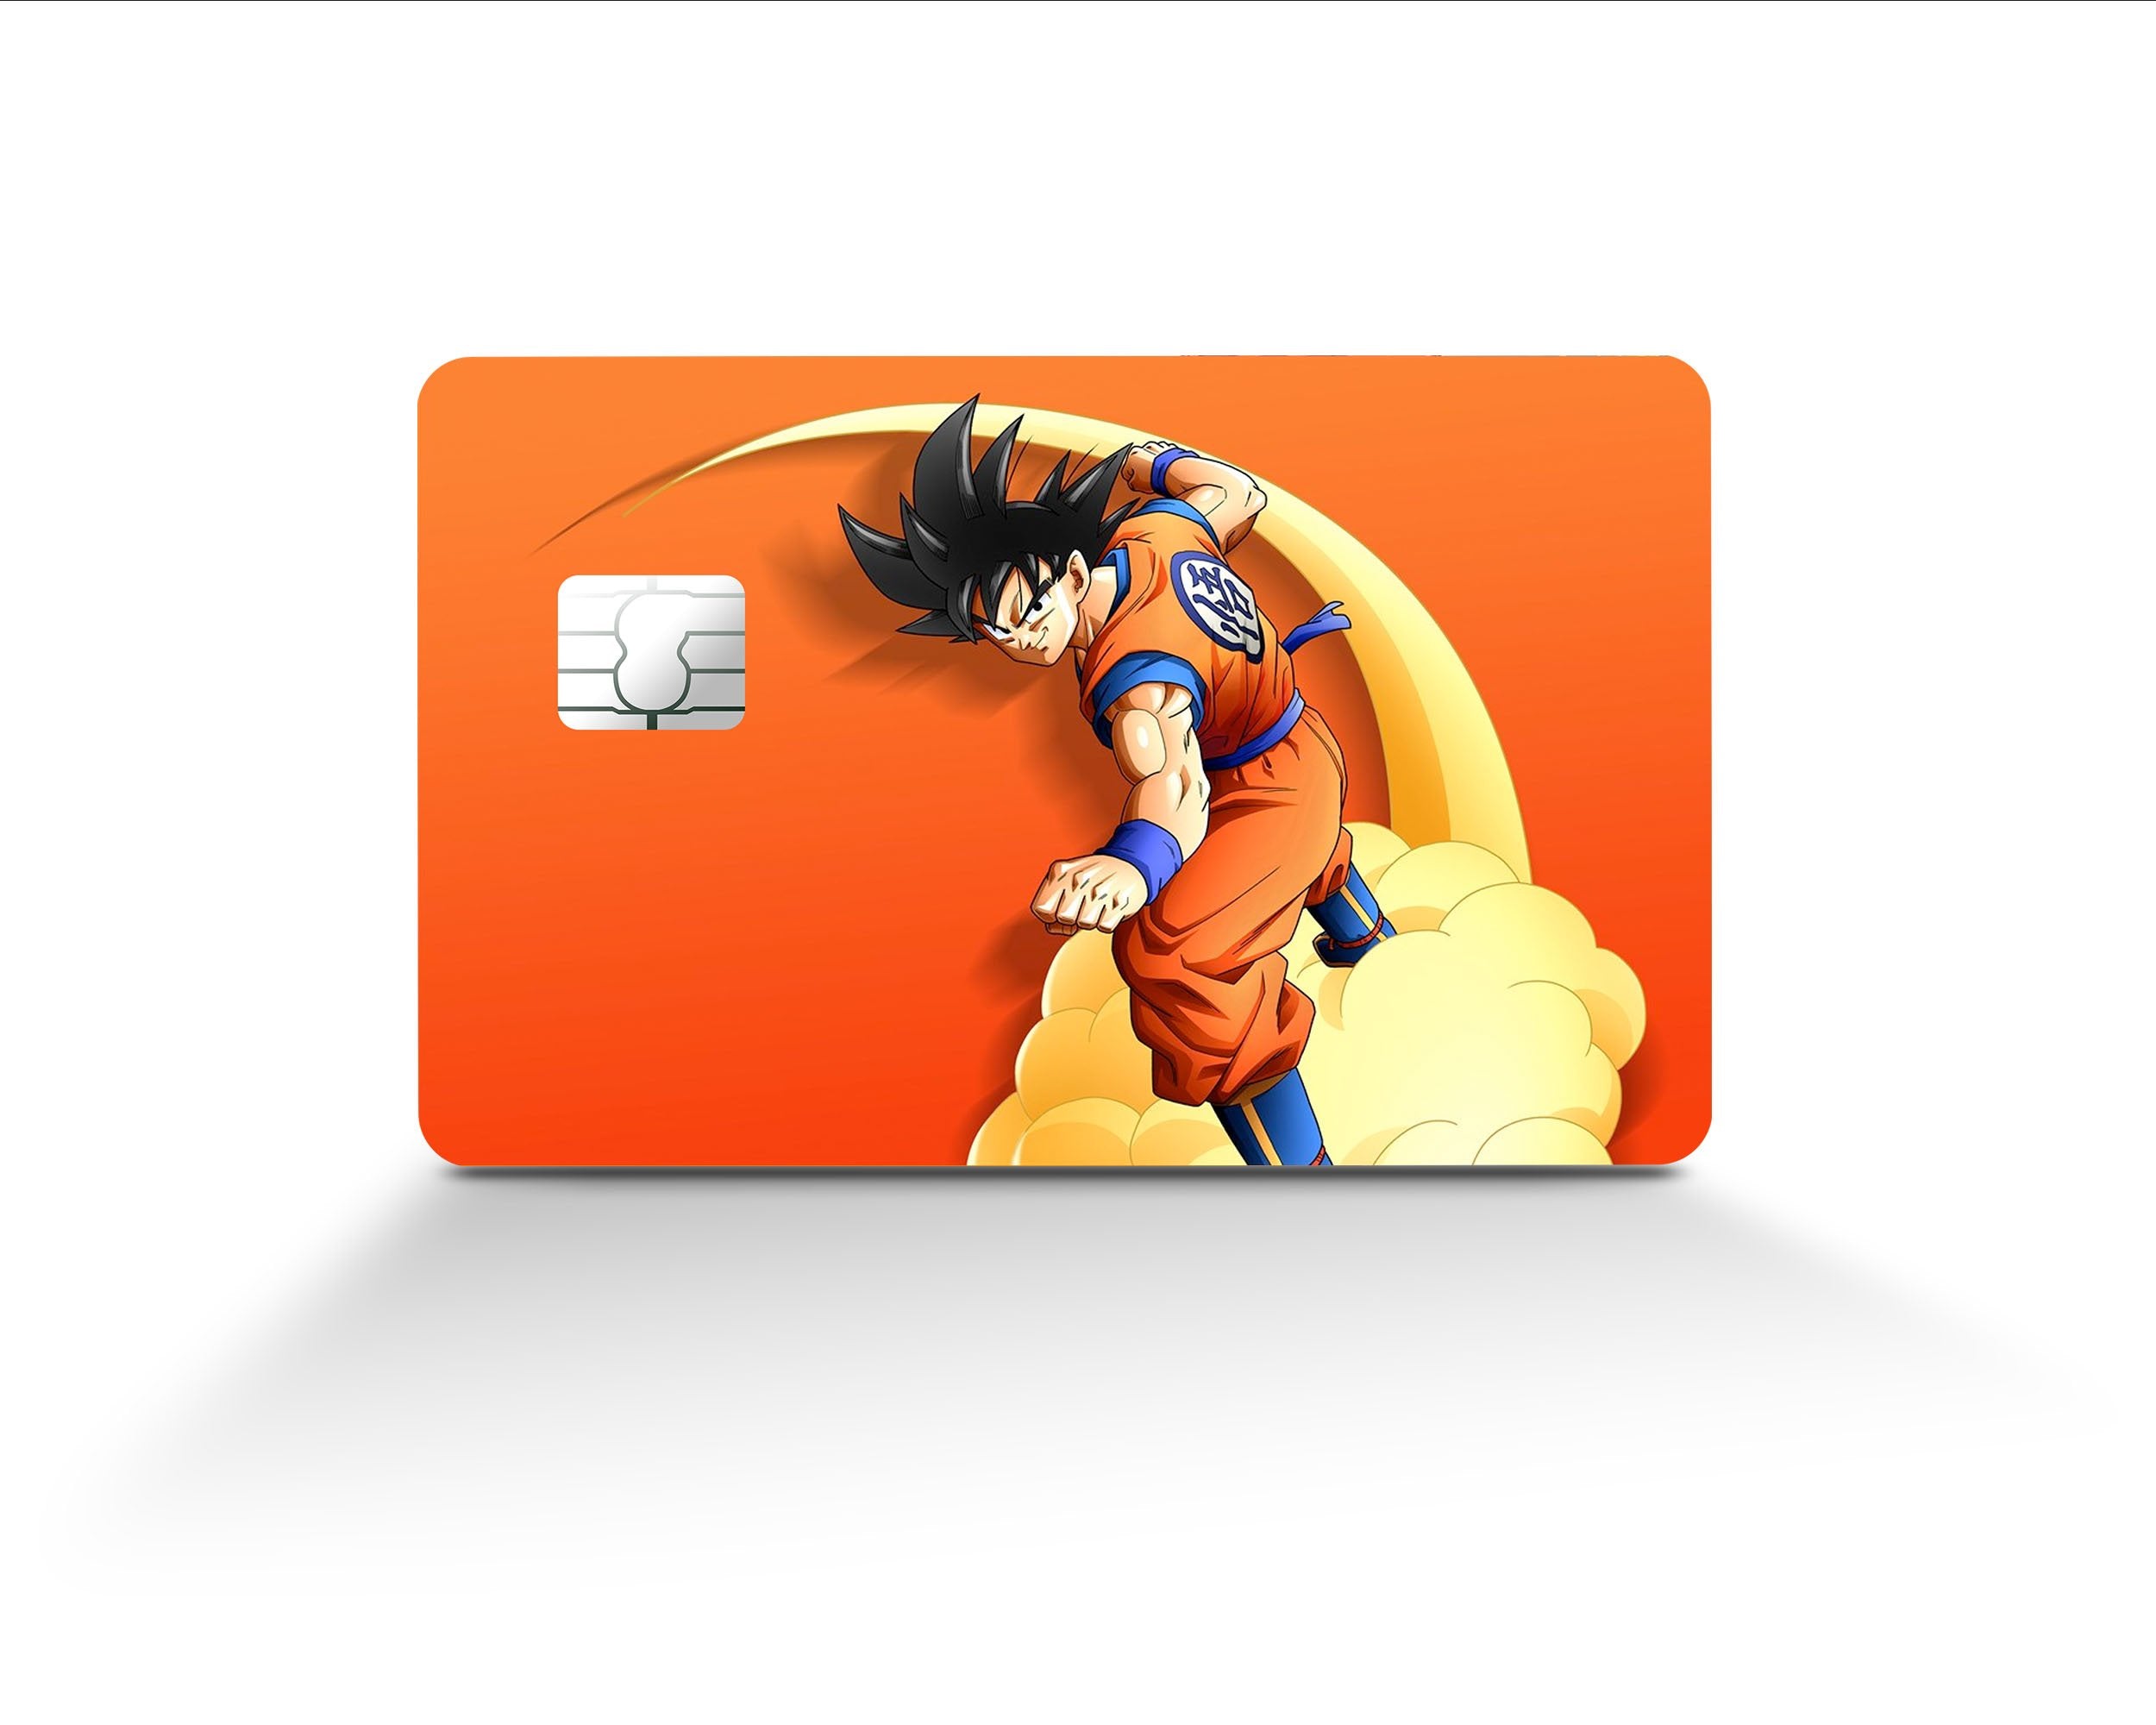 Naruto NineTail Credit Card Credit Card Skin  Anime Town Creations